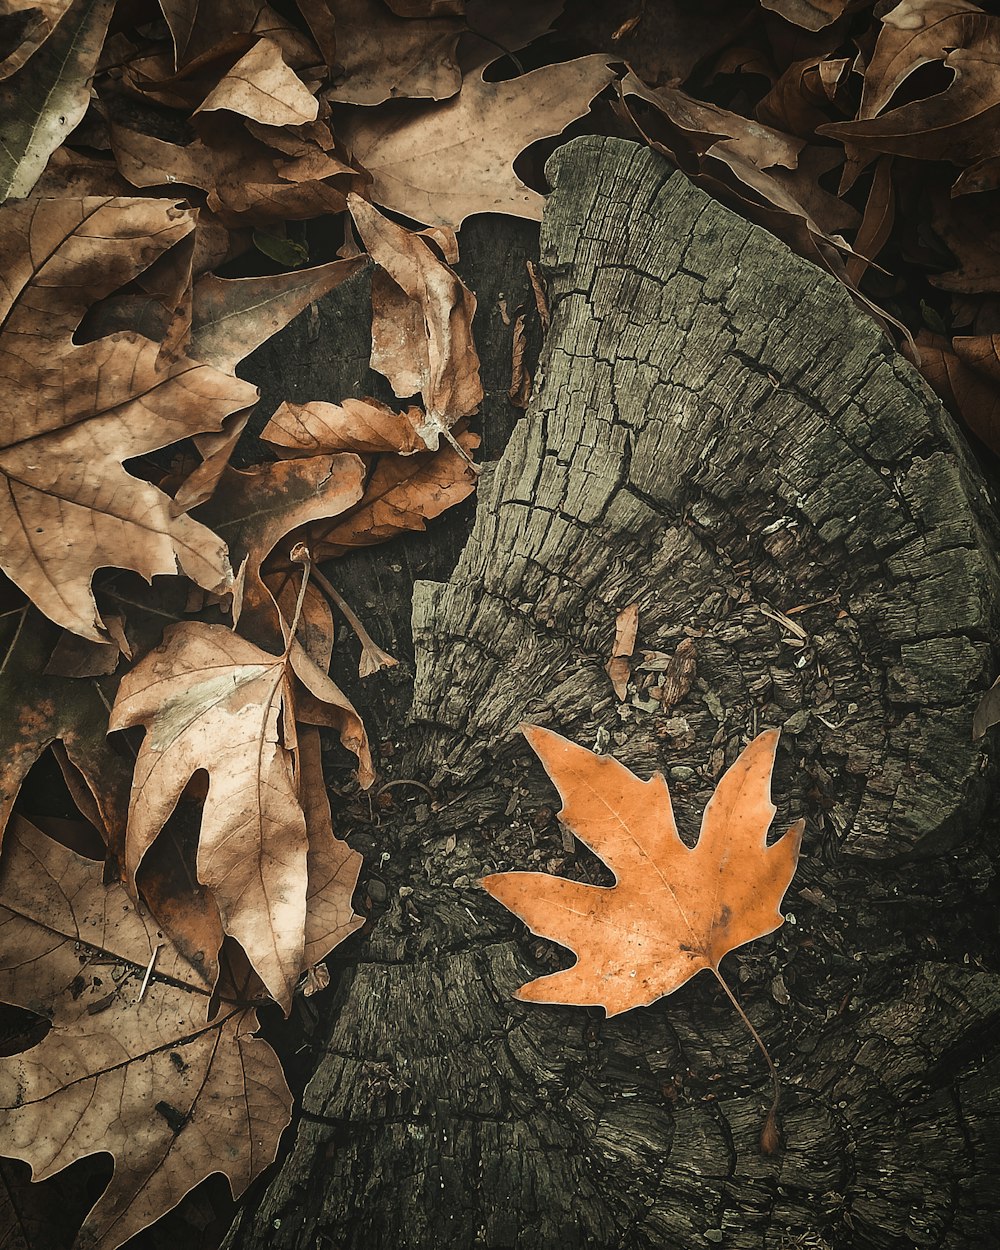 500+ Maple Leaf Pictures [HD] | Download Free Images on Unsplash